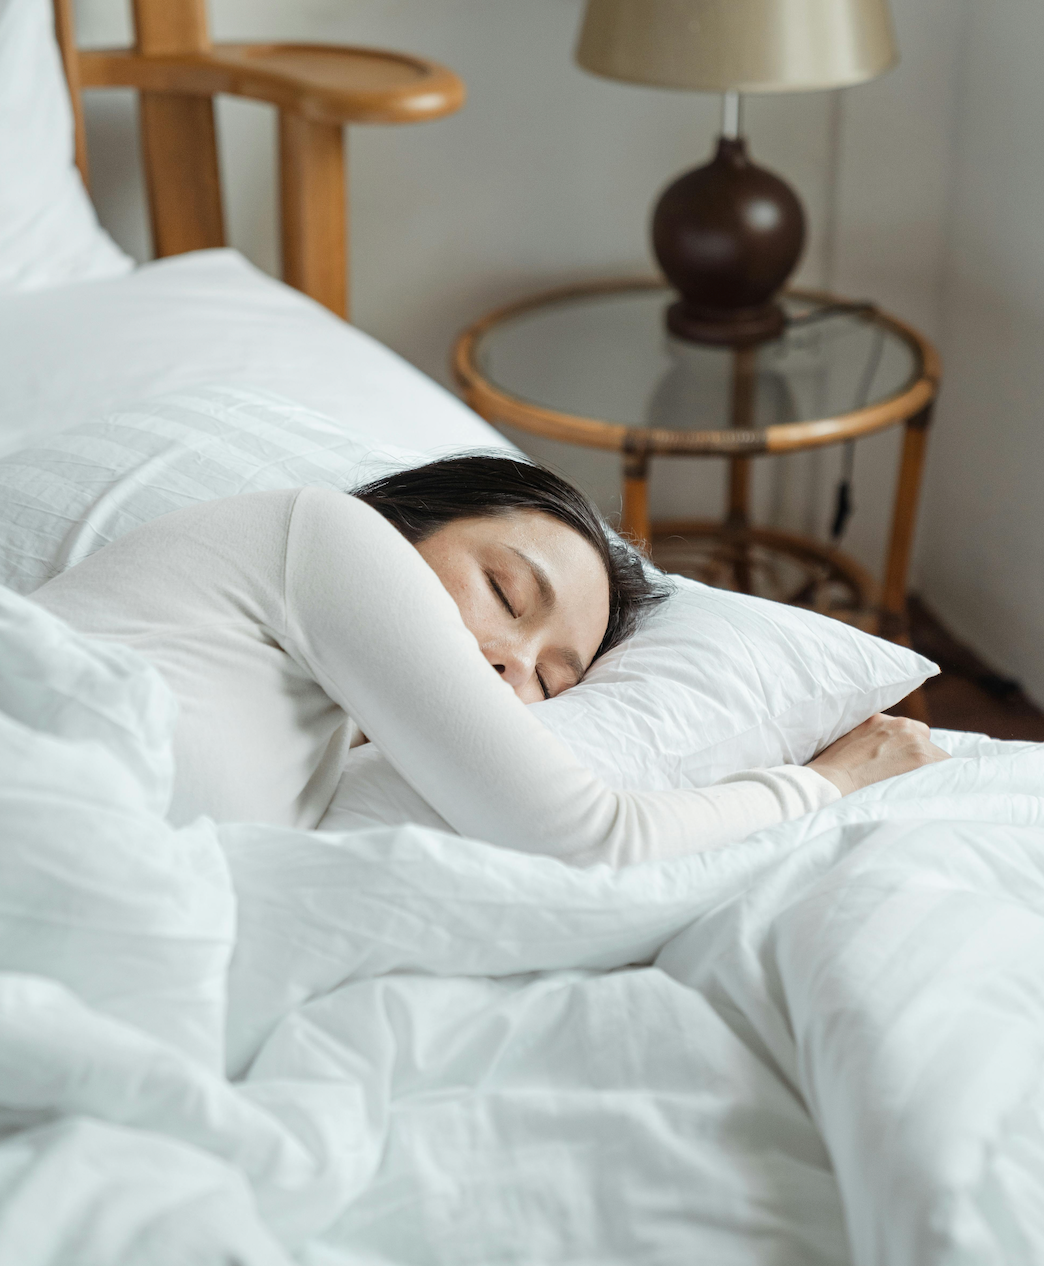 Women sleeping comfortably in bed